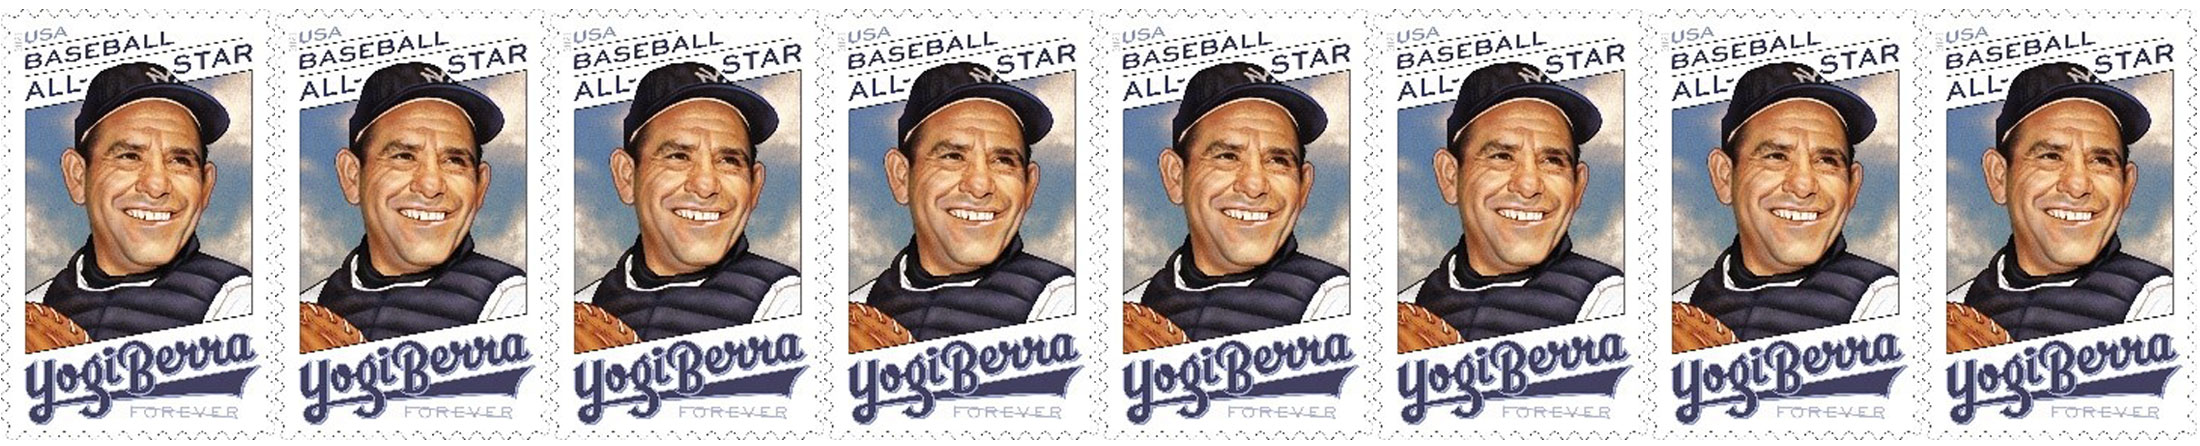 Yogi Berra postage stamp unveiling